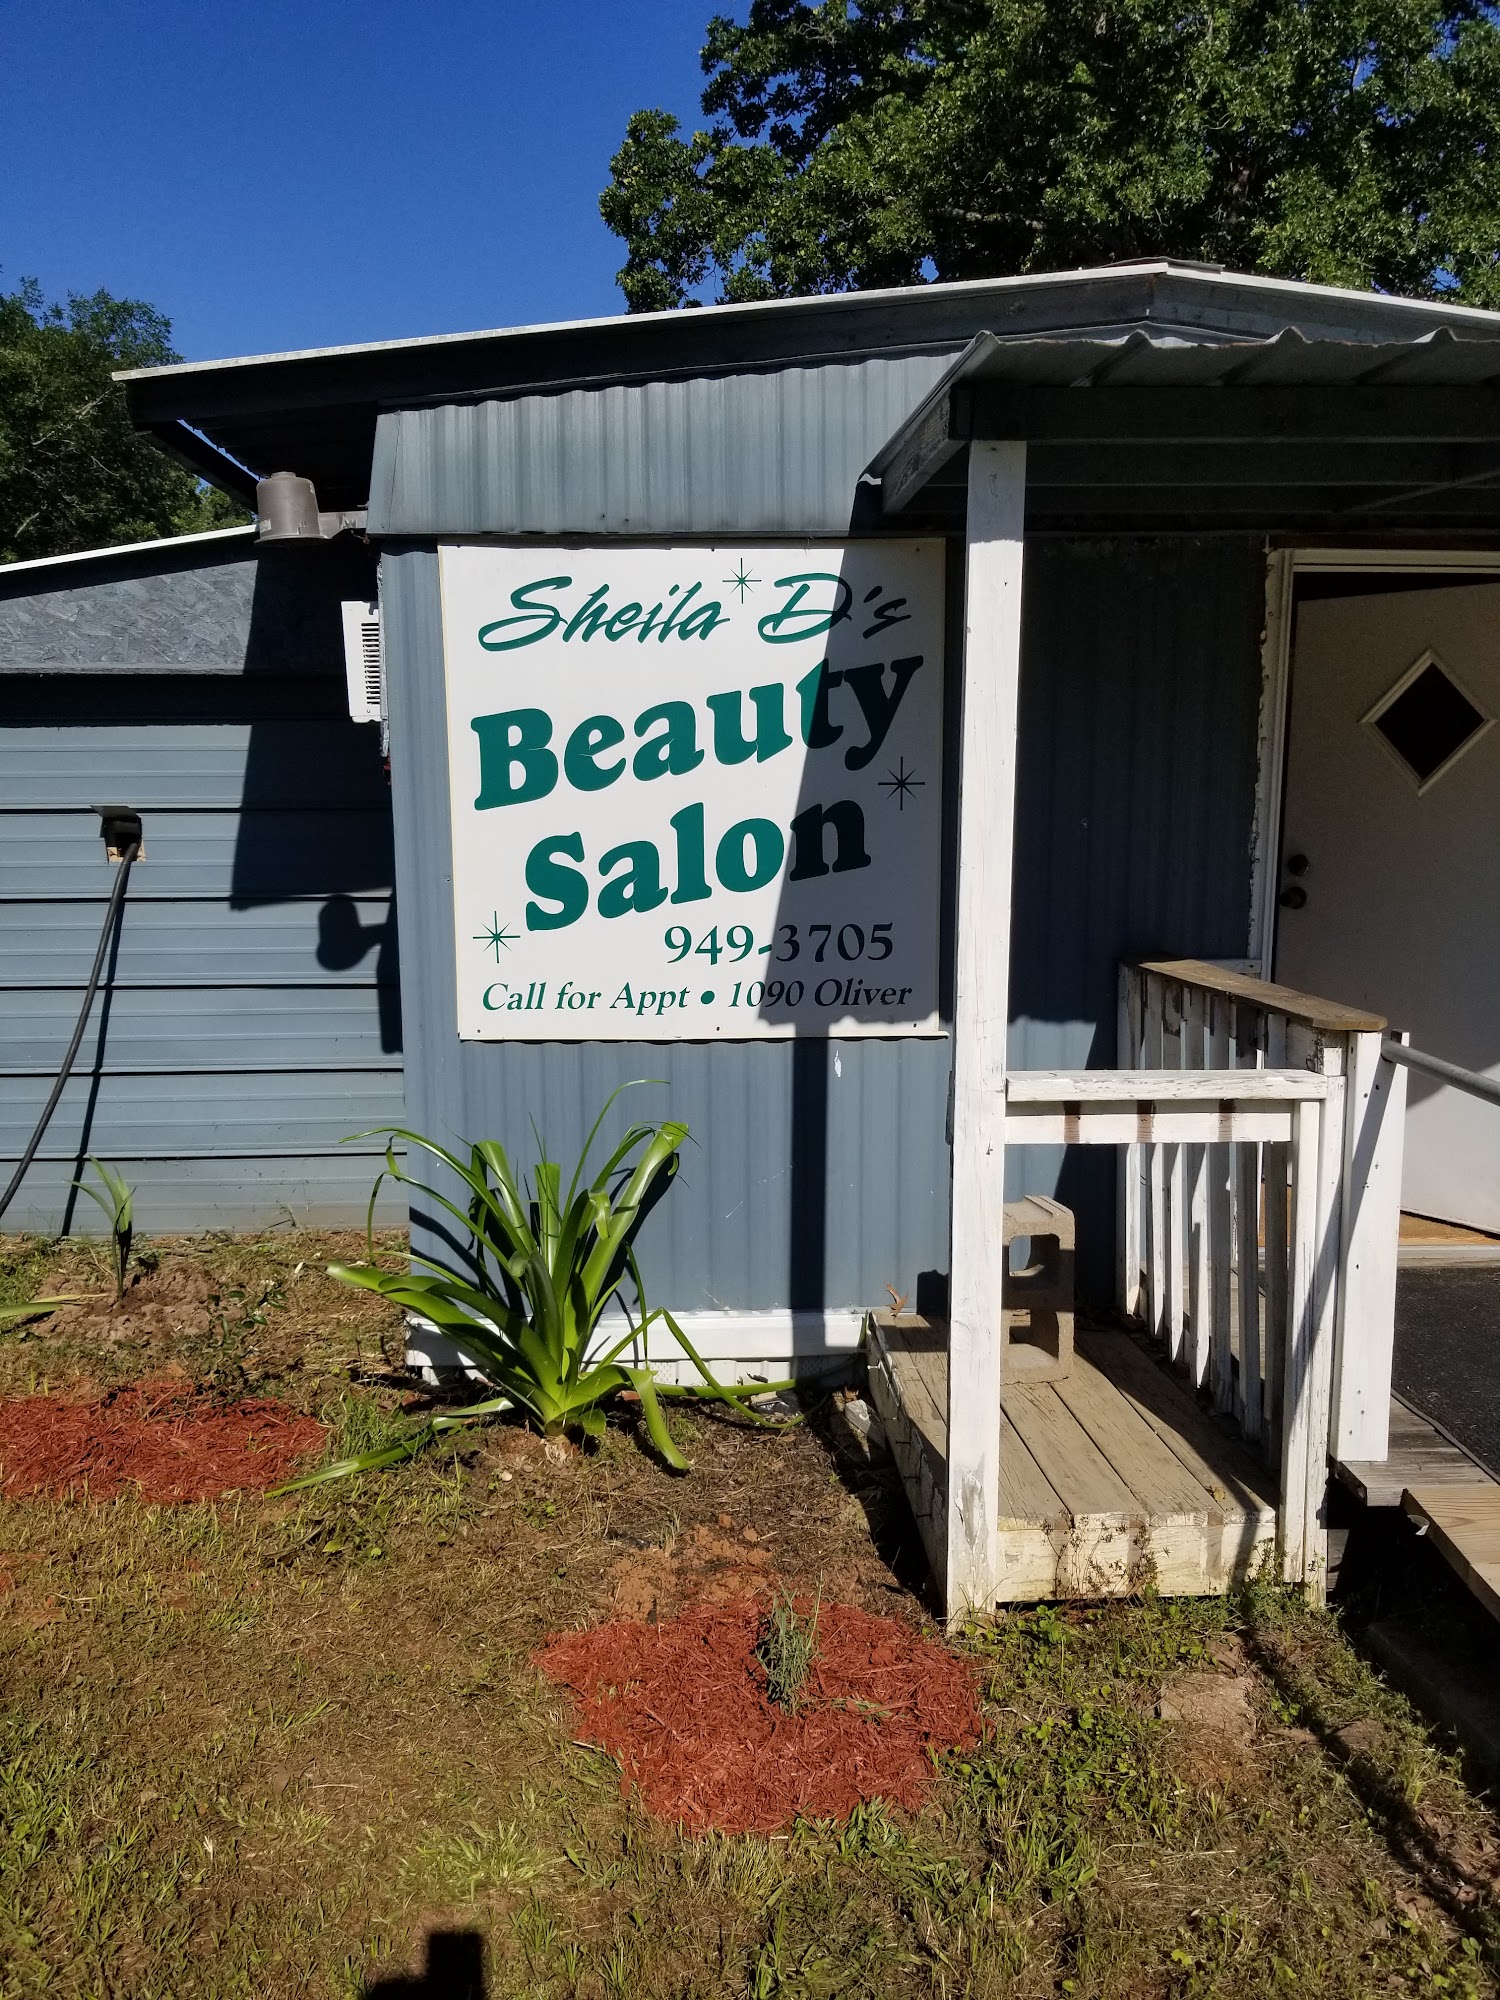 Sheila D's Beauty Salon